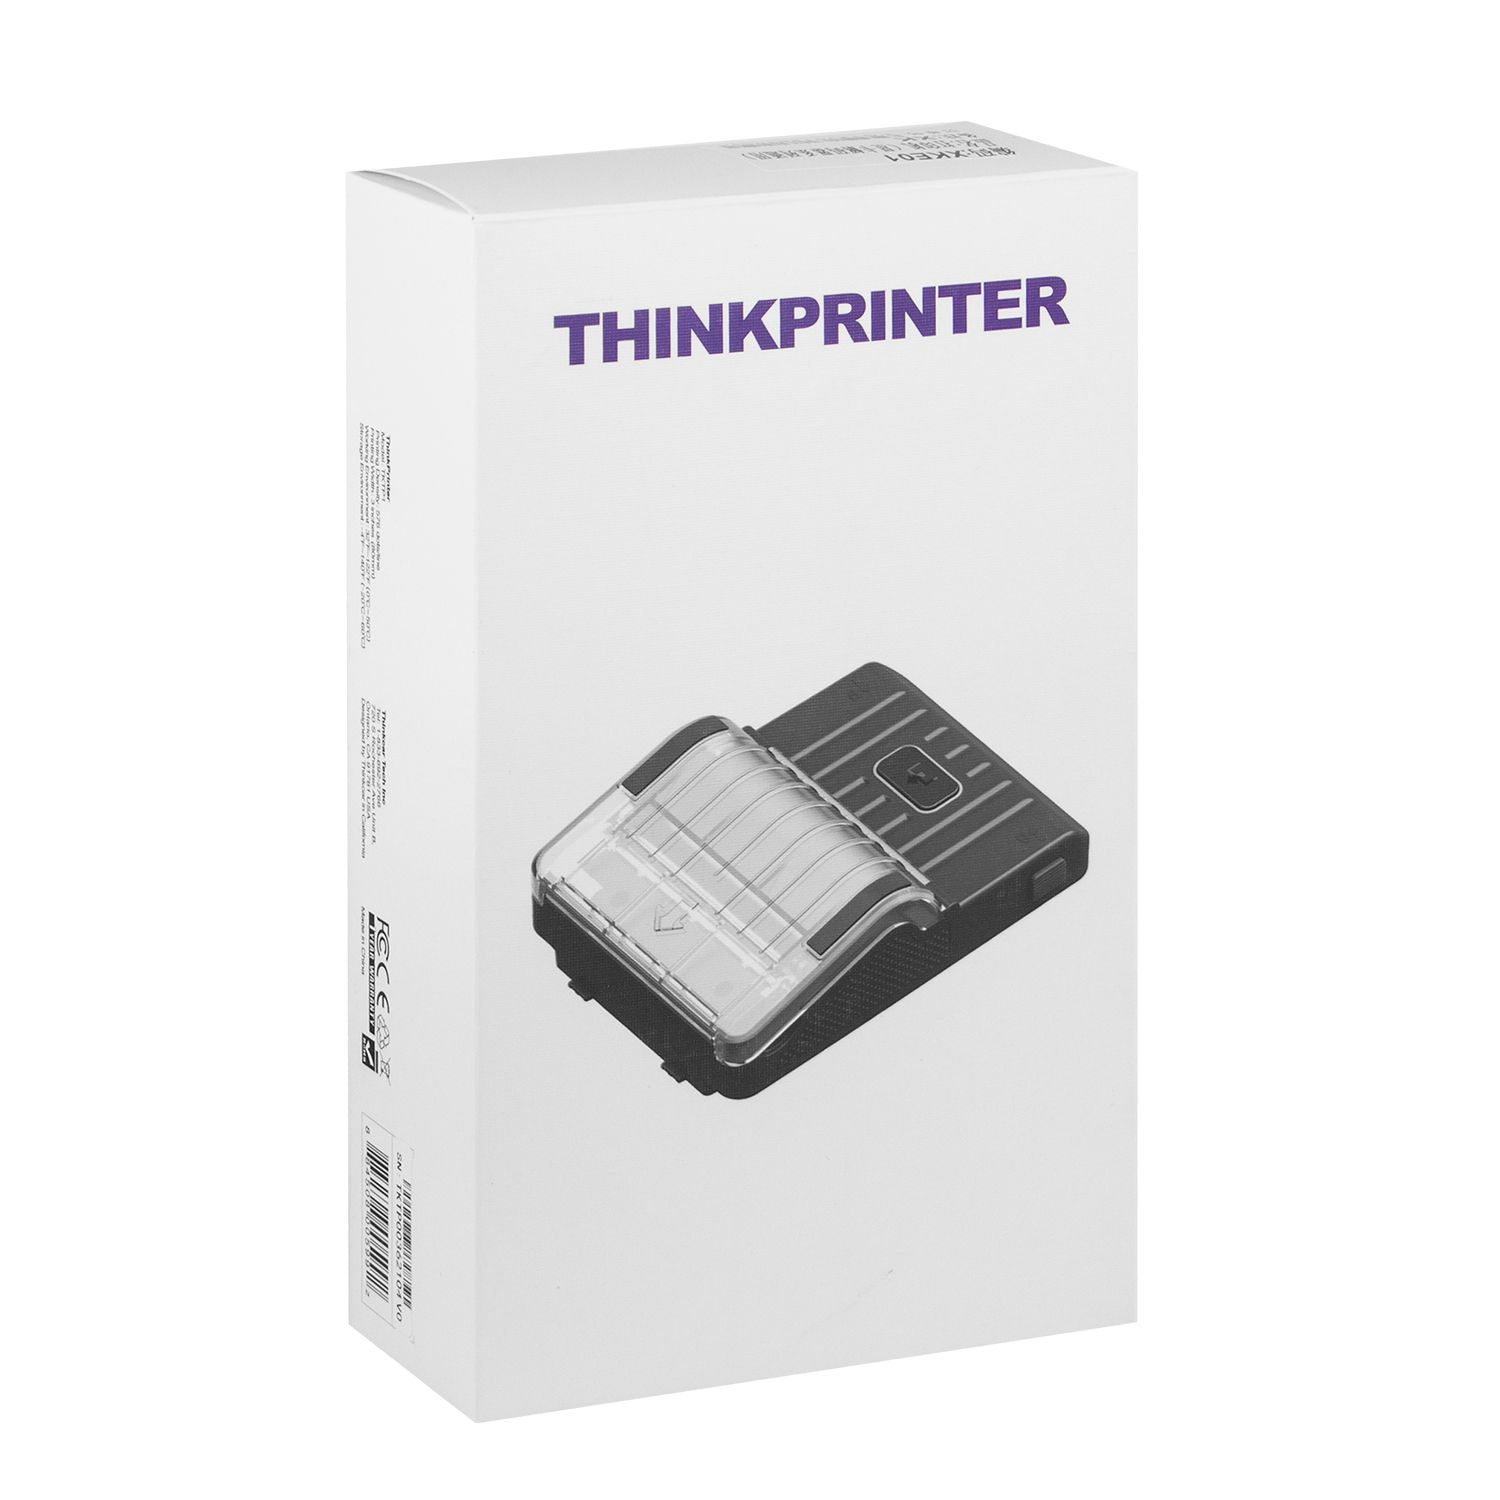 Think100% thinkpro printer original / Professional thinkpro printer Tool